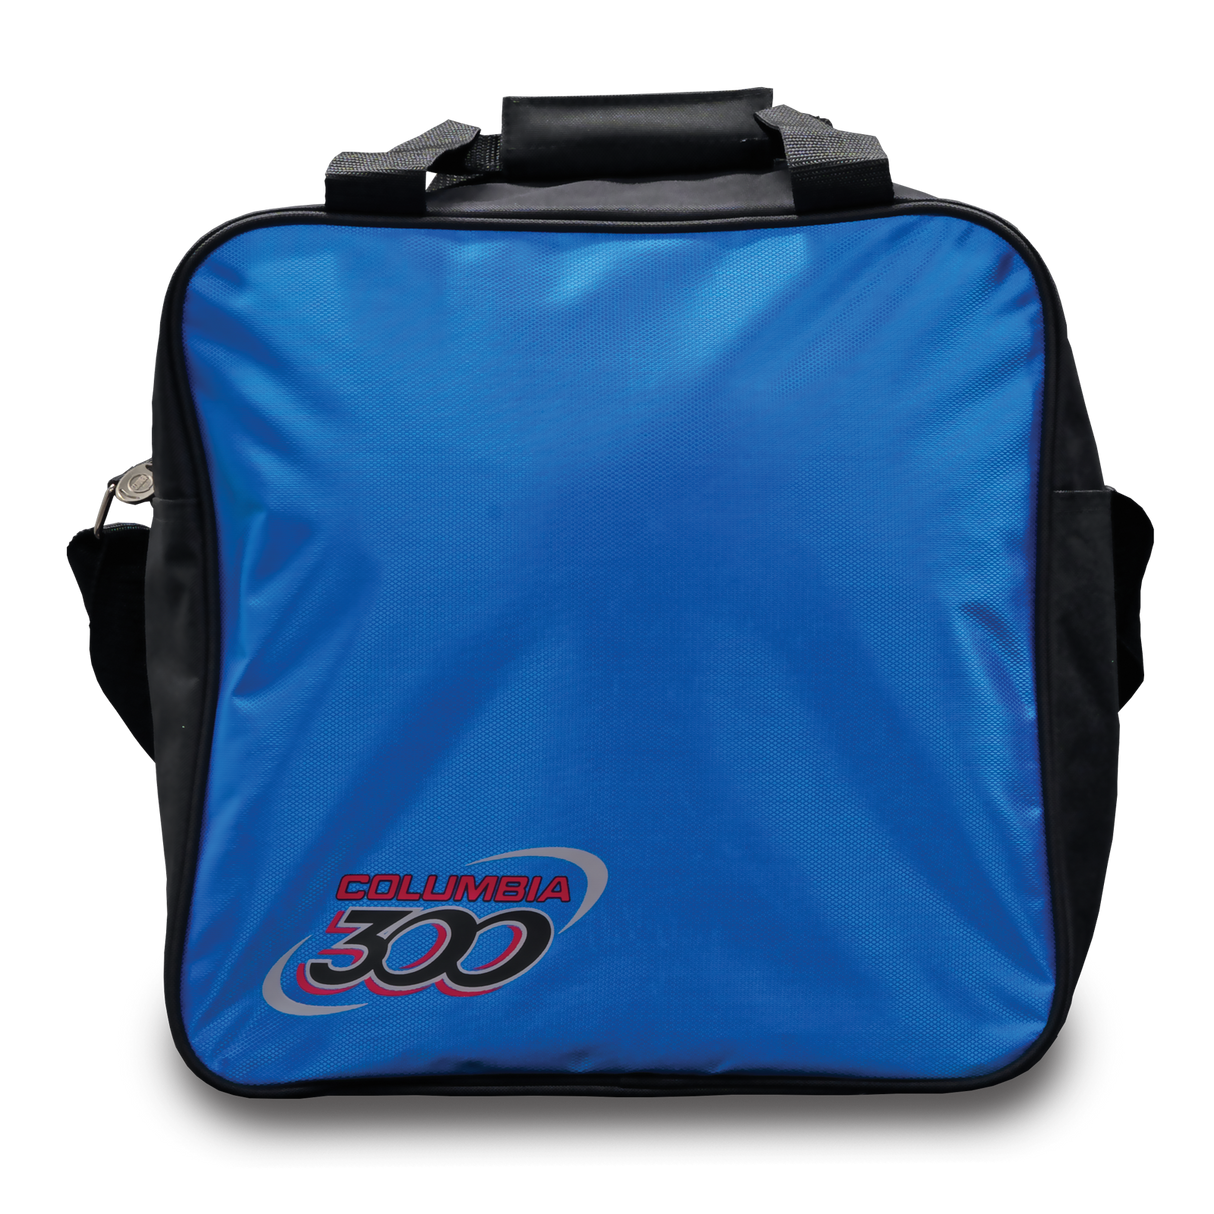 Columbia 300 White Dot Single 1 Ball Tote Blue Bowling Bag suitcase league tournament play sale discount coupon online pba tour